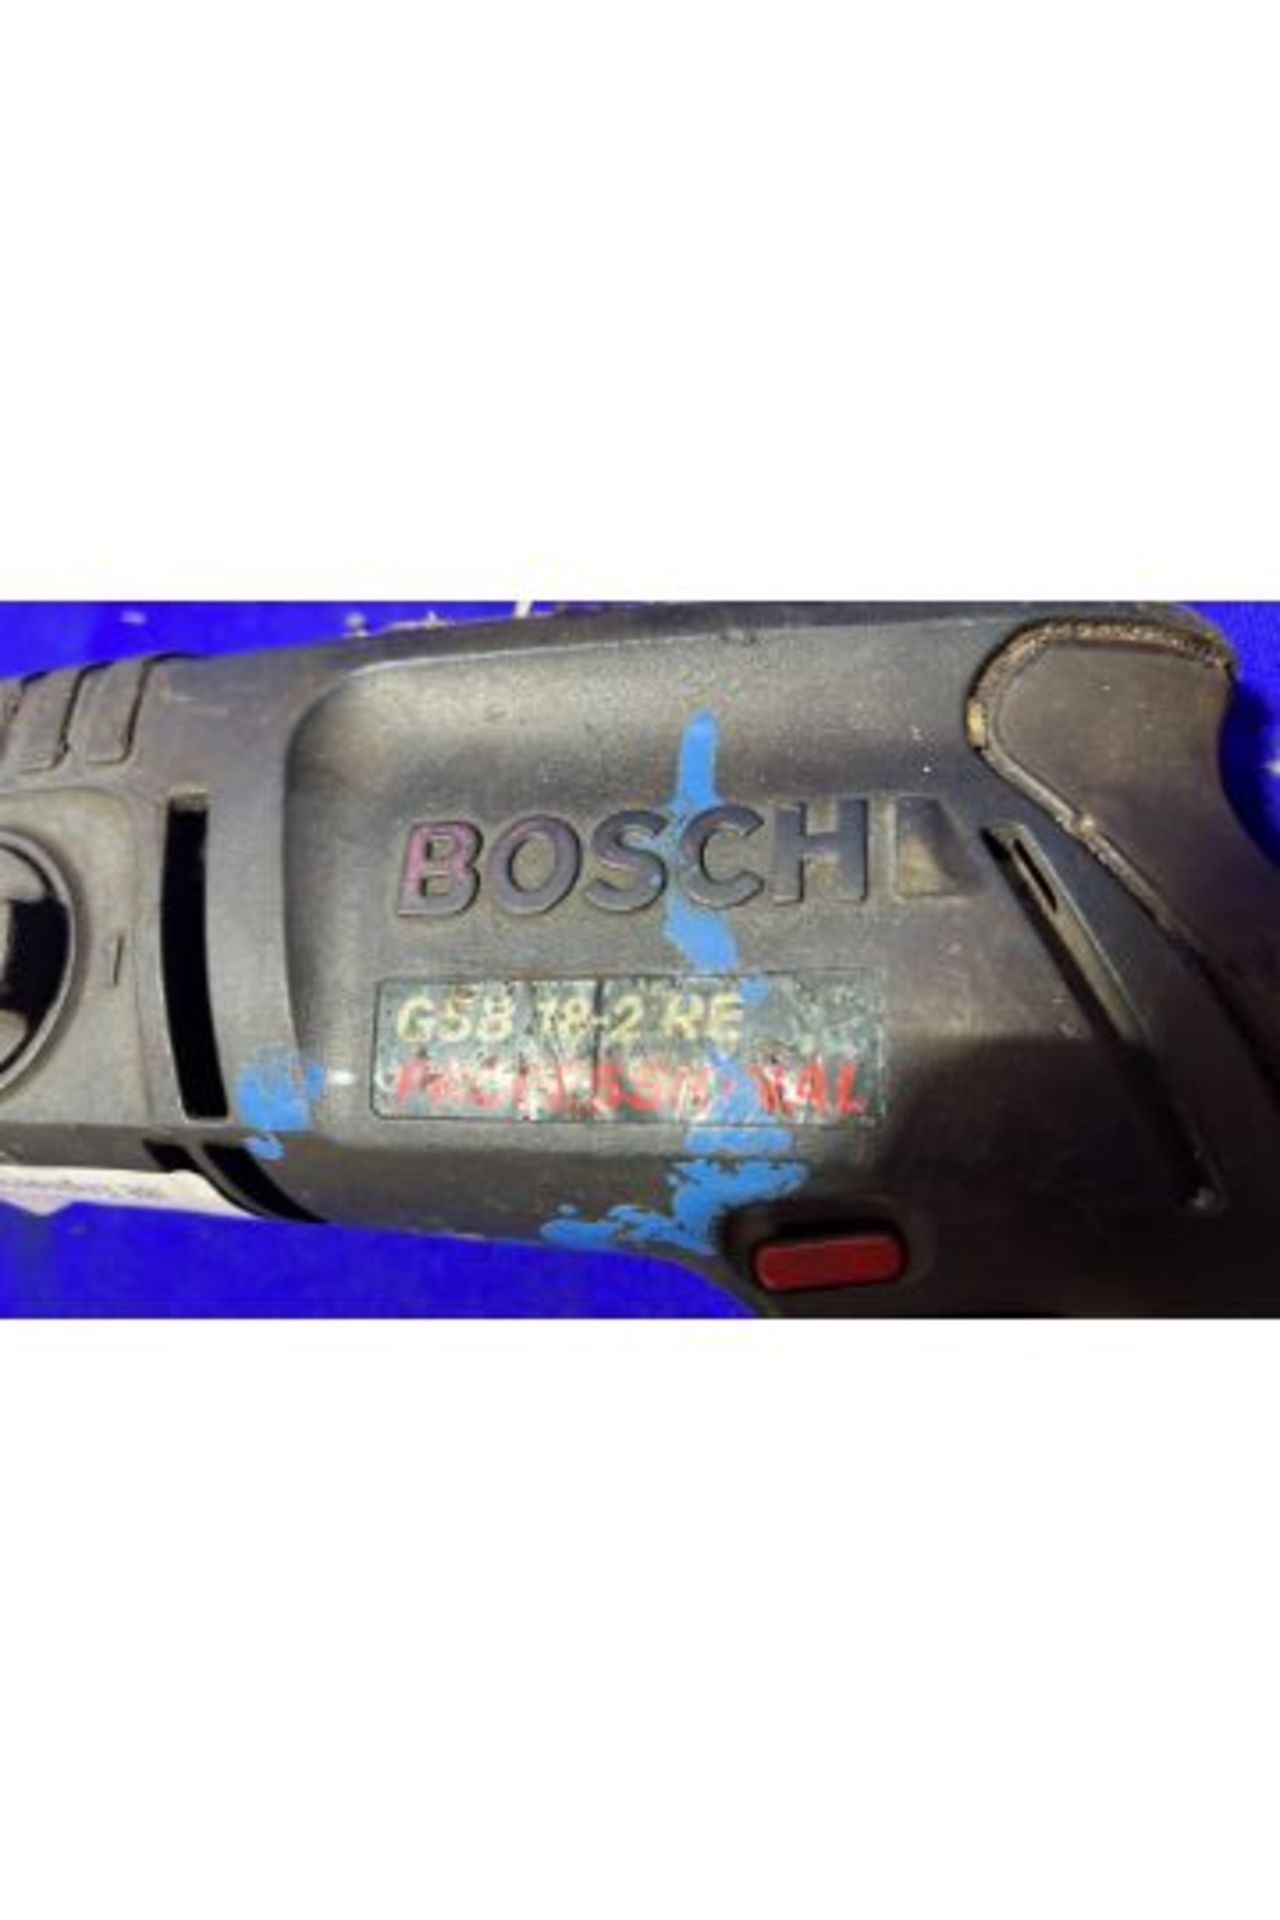 Bosh GSB 18-RE Hammer Drill - Image 4 of 4